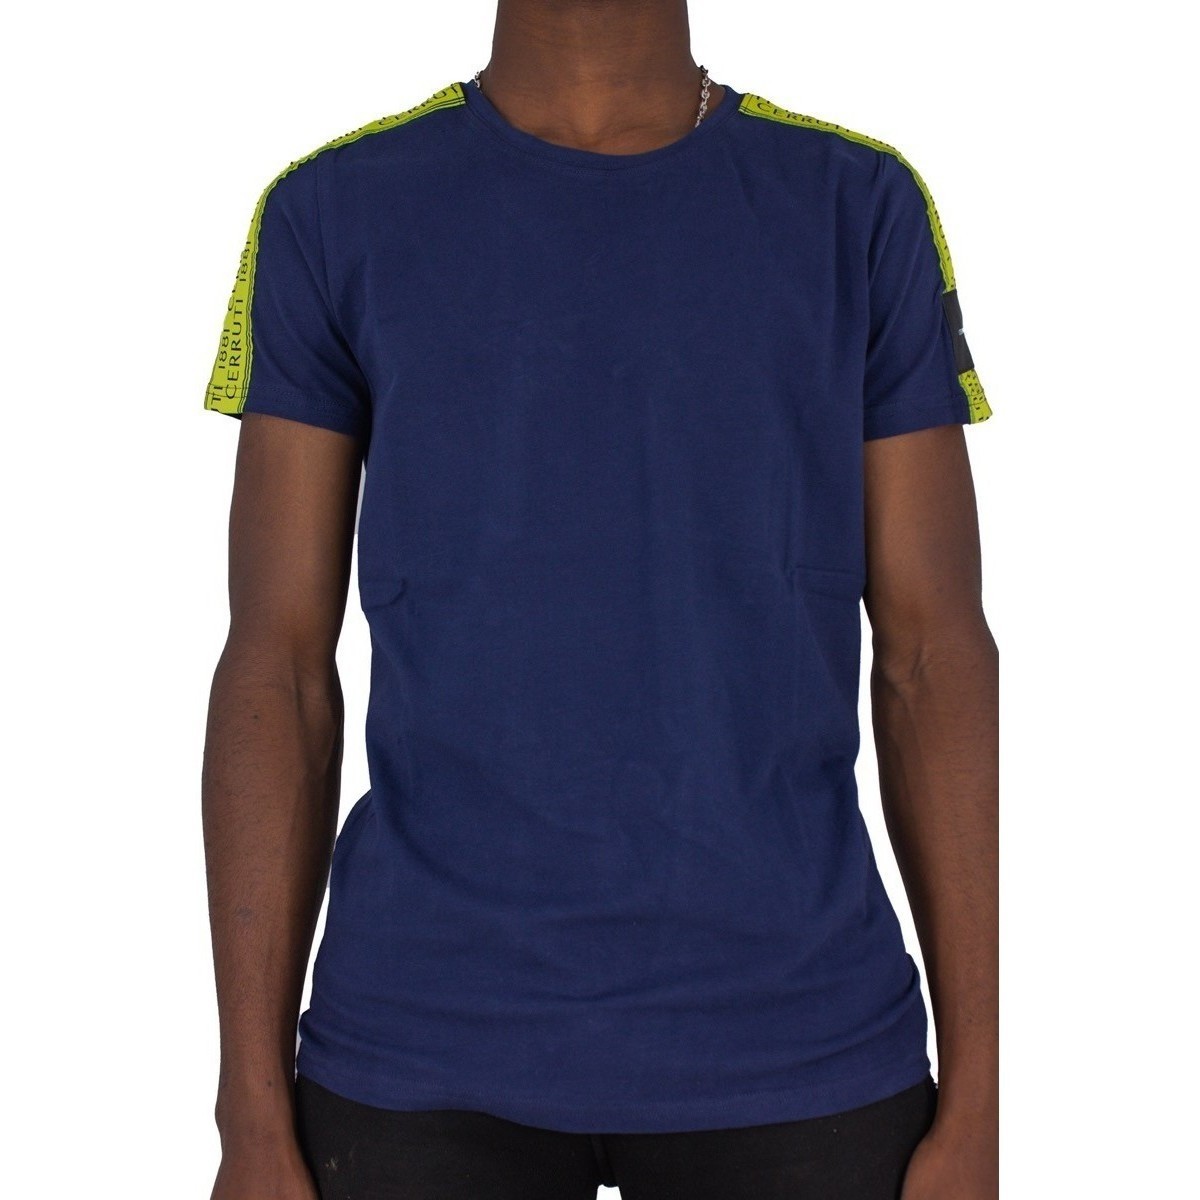 Vêtements Homme embossed-slogan cotton T-shirt Padva Bleu